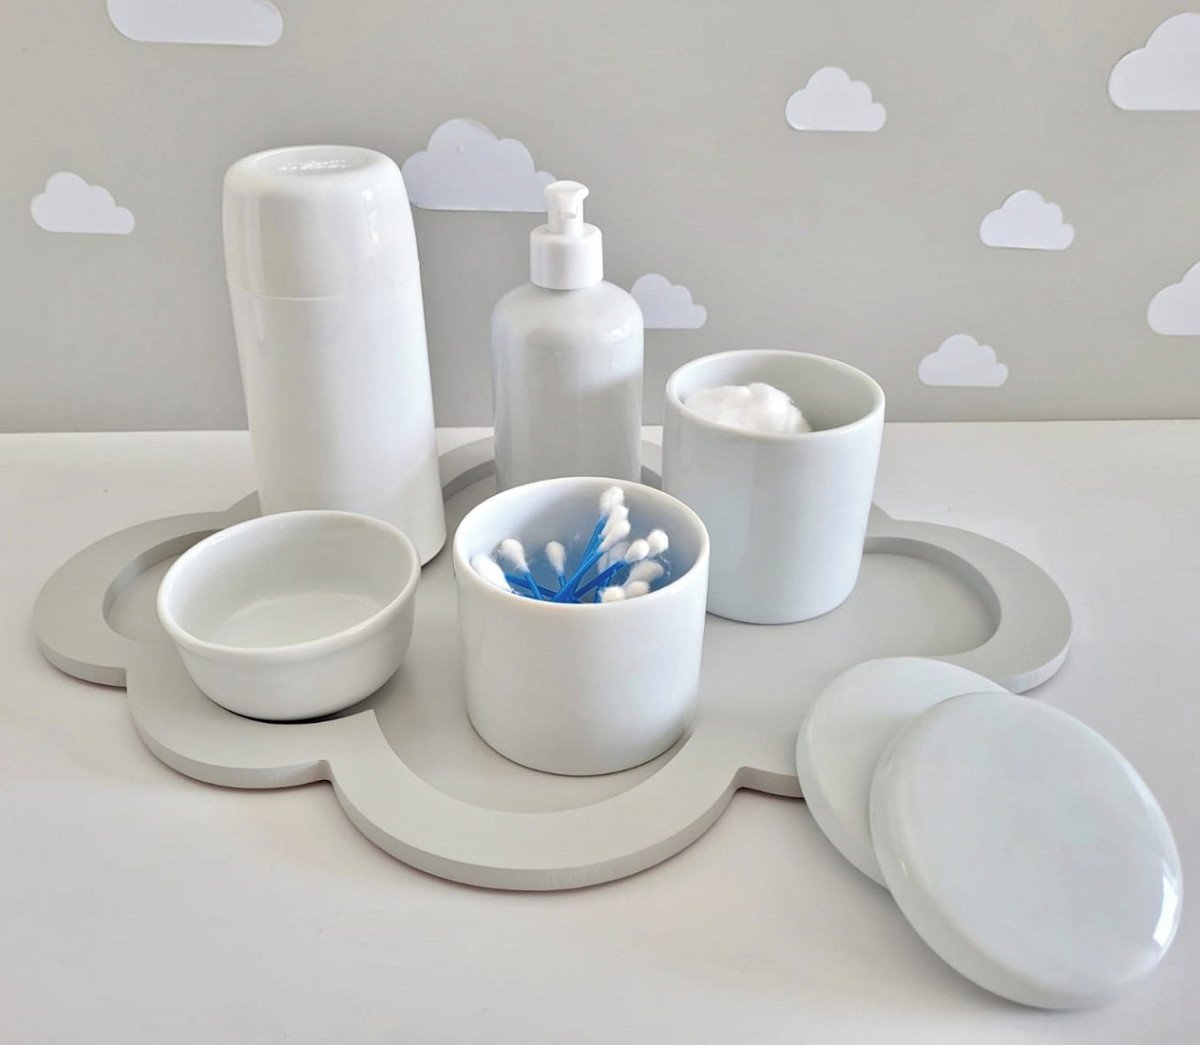 Kit Higiene Porcelana Bebê + Bandeja Nuvem Cinza.